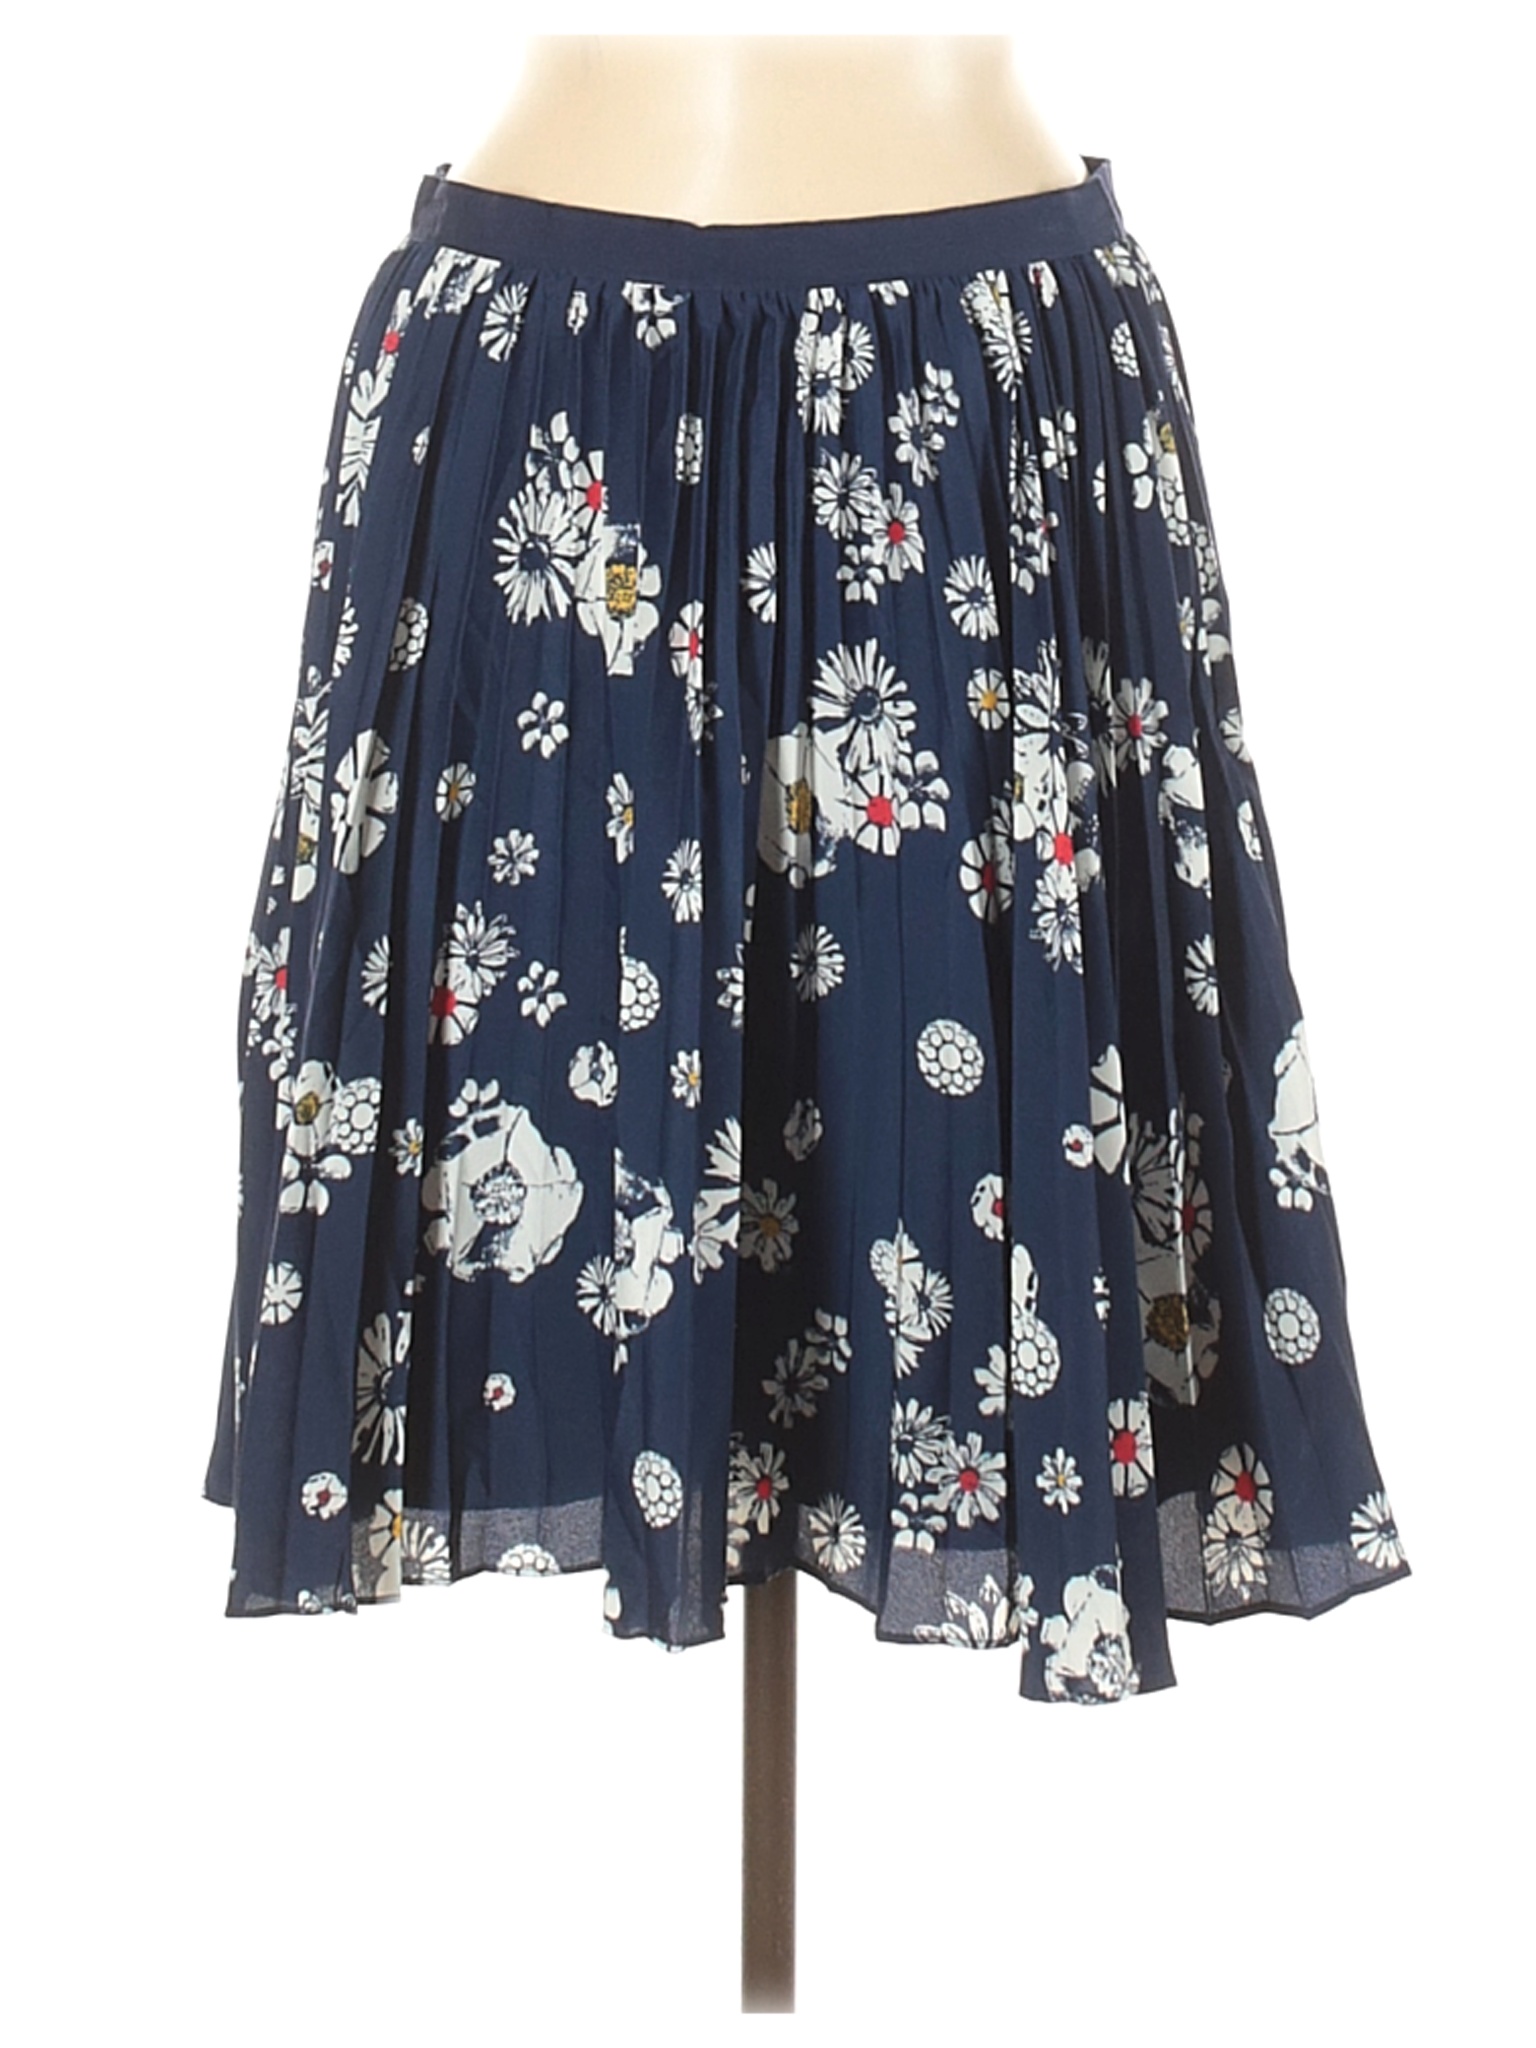 Jason Wu for Target Women Blue Casual Skirt 8 | eBay